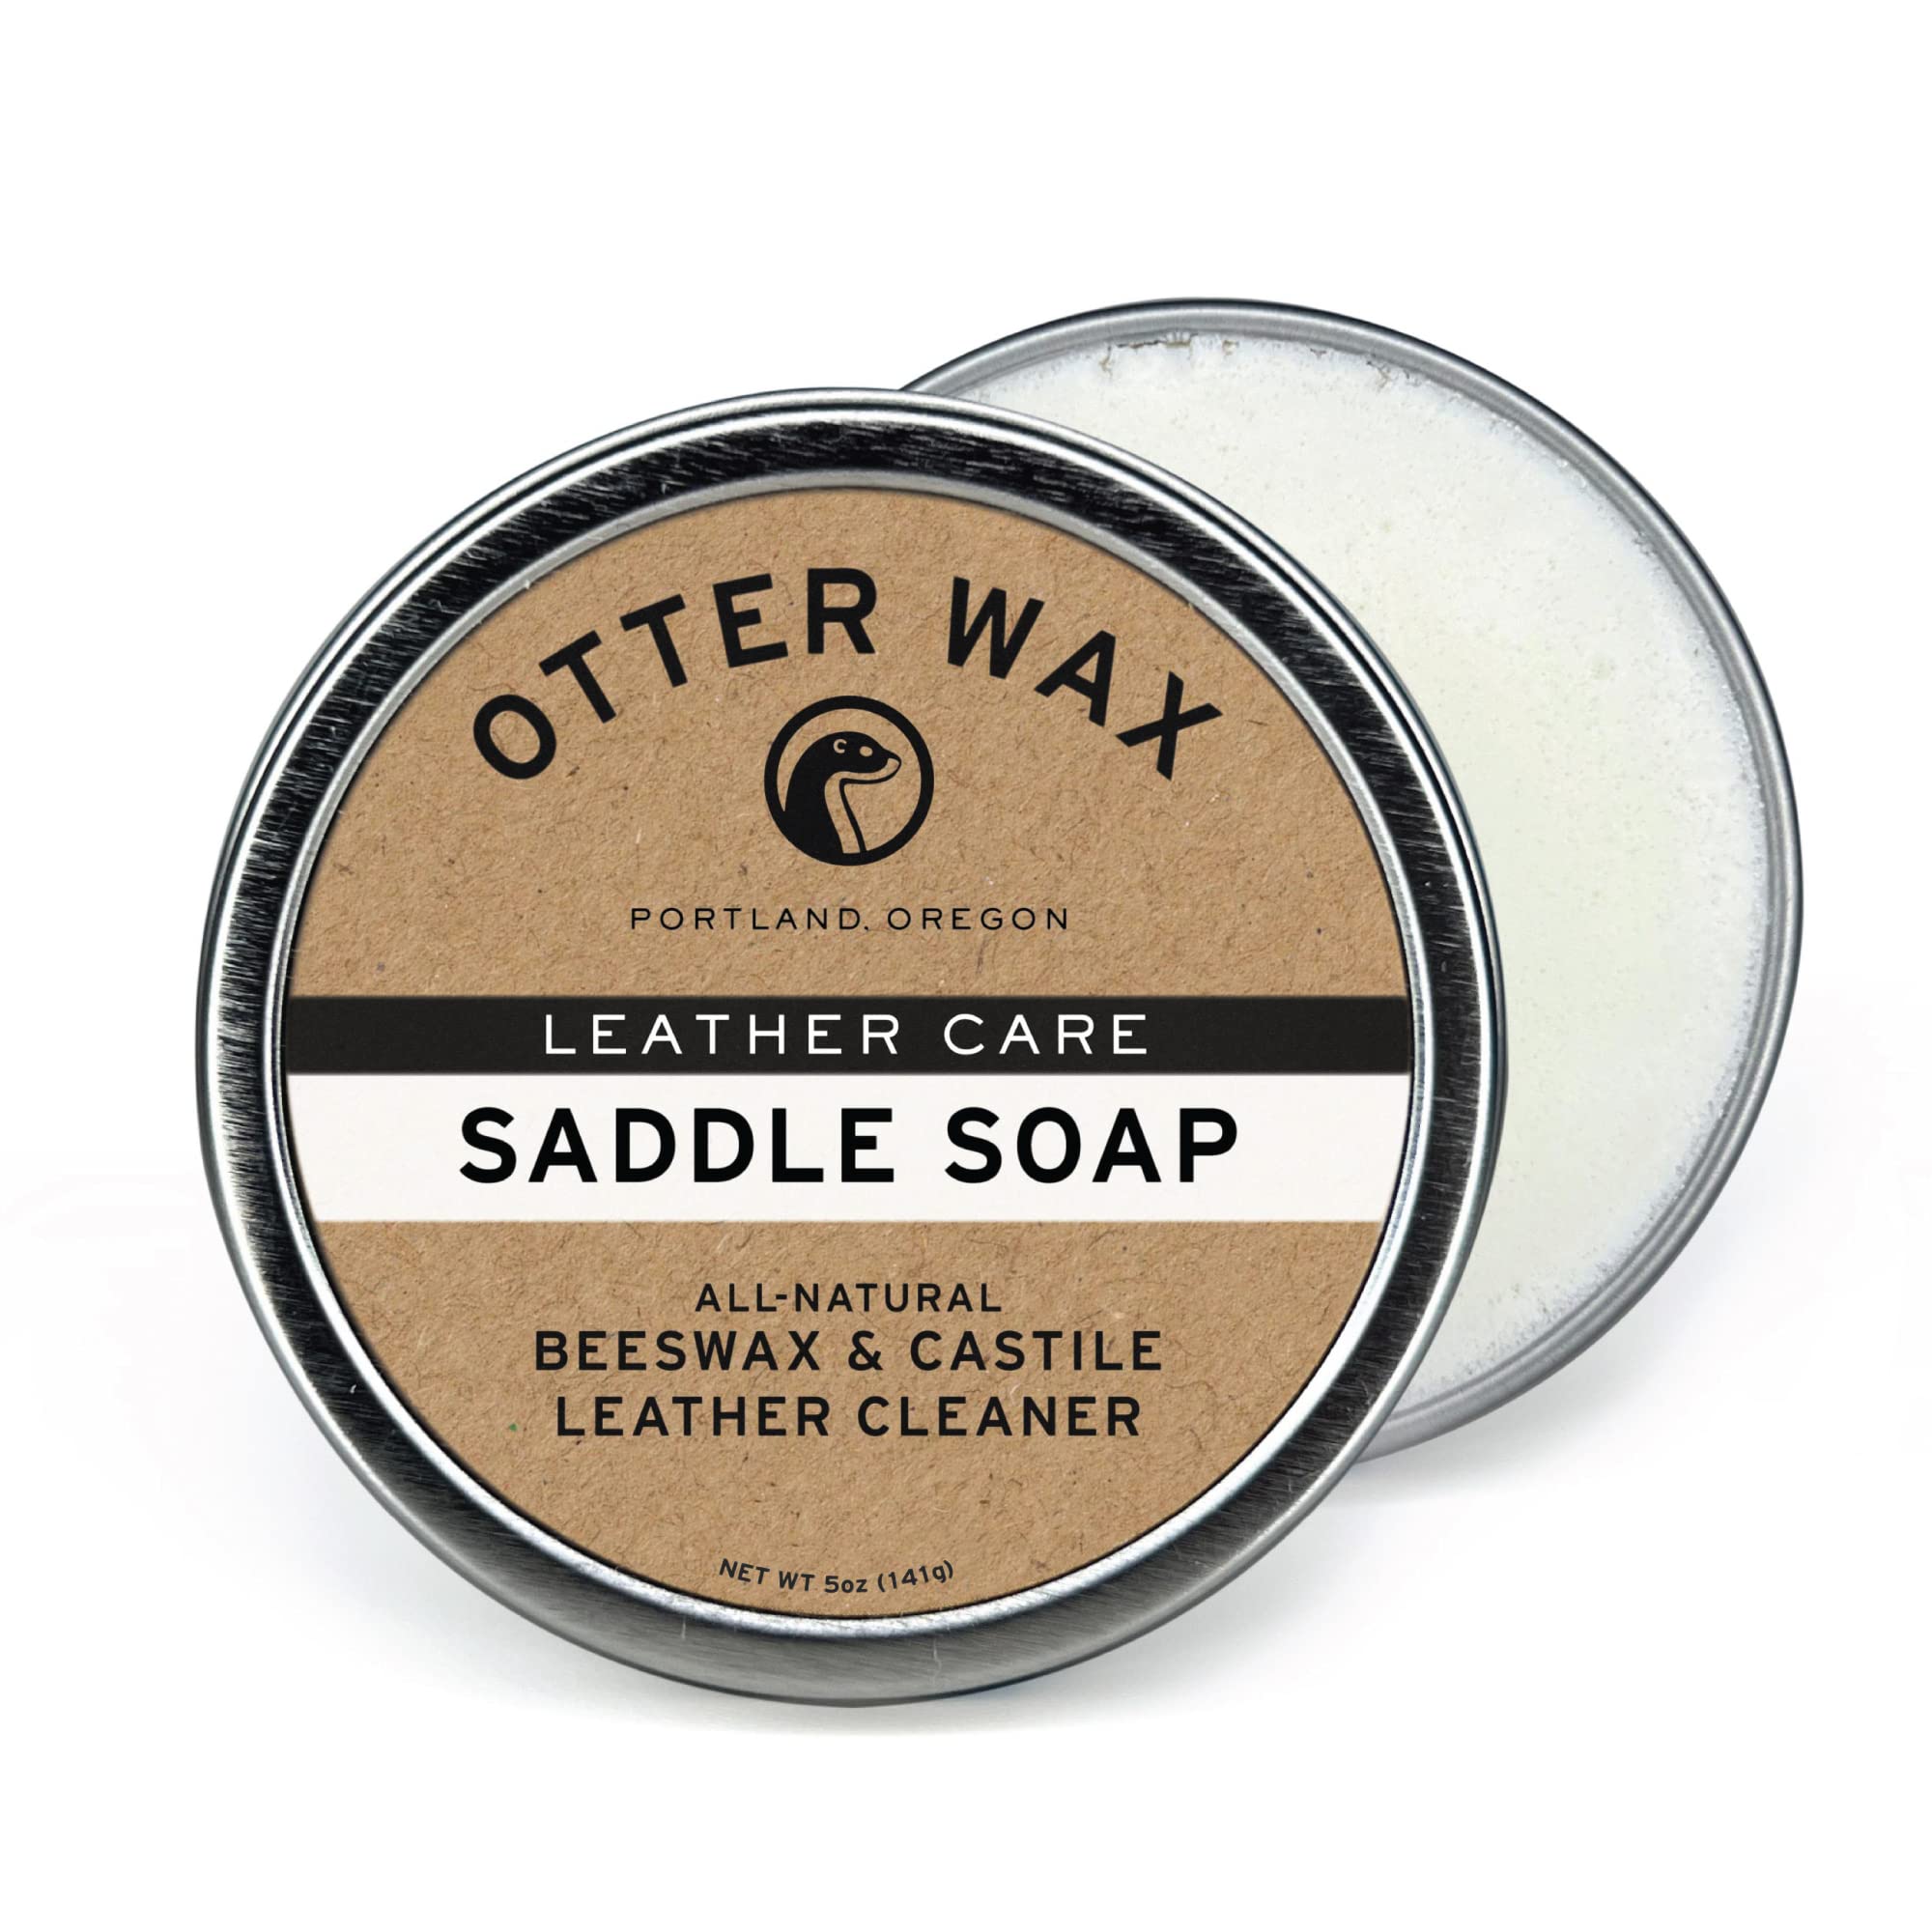 Otter Wax Saddle Soap